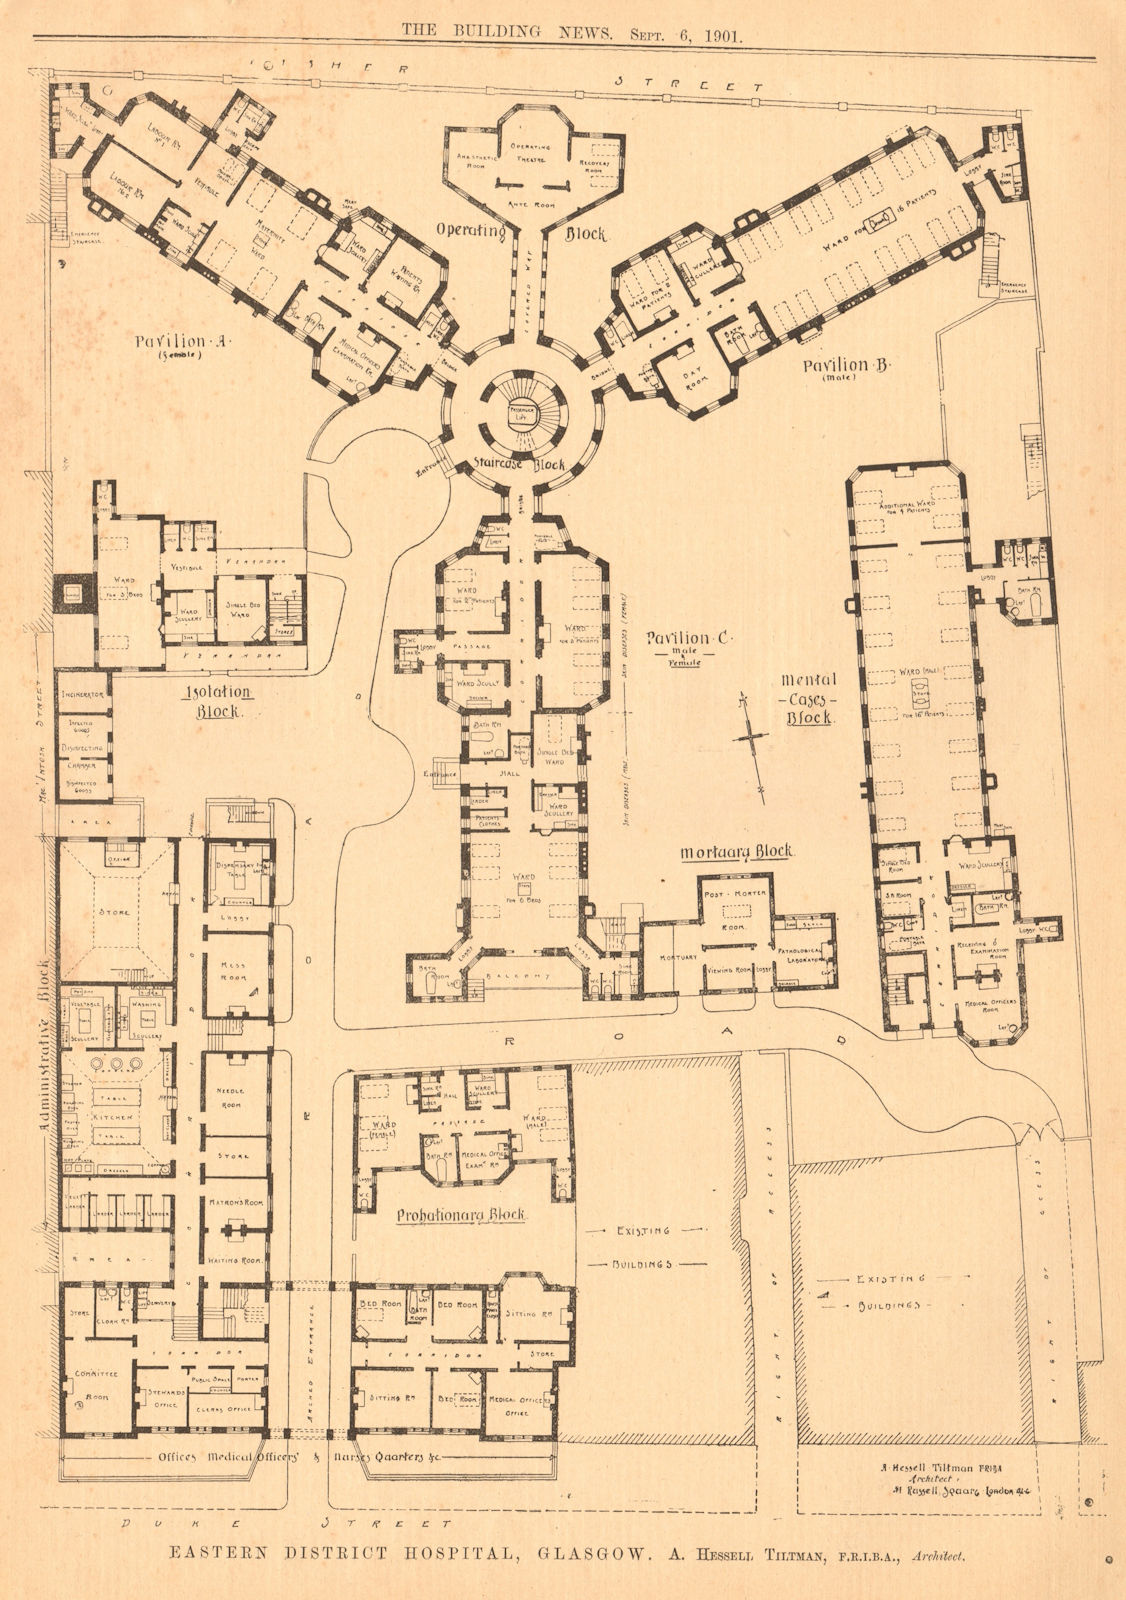 Eastern District Hospital, Glasgow. A. Hessell Tiltman, Architect. Plan 1901